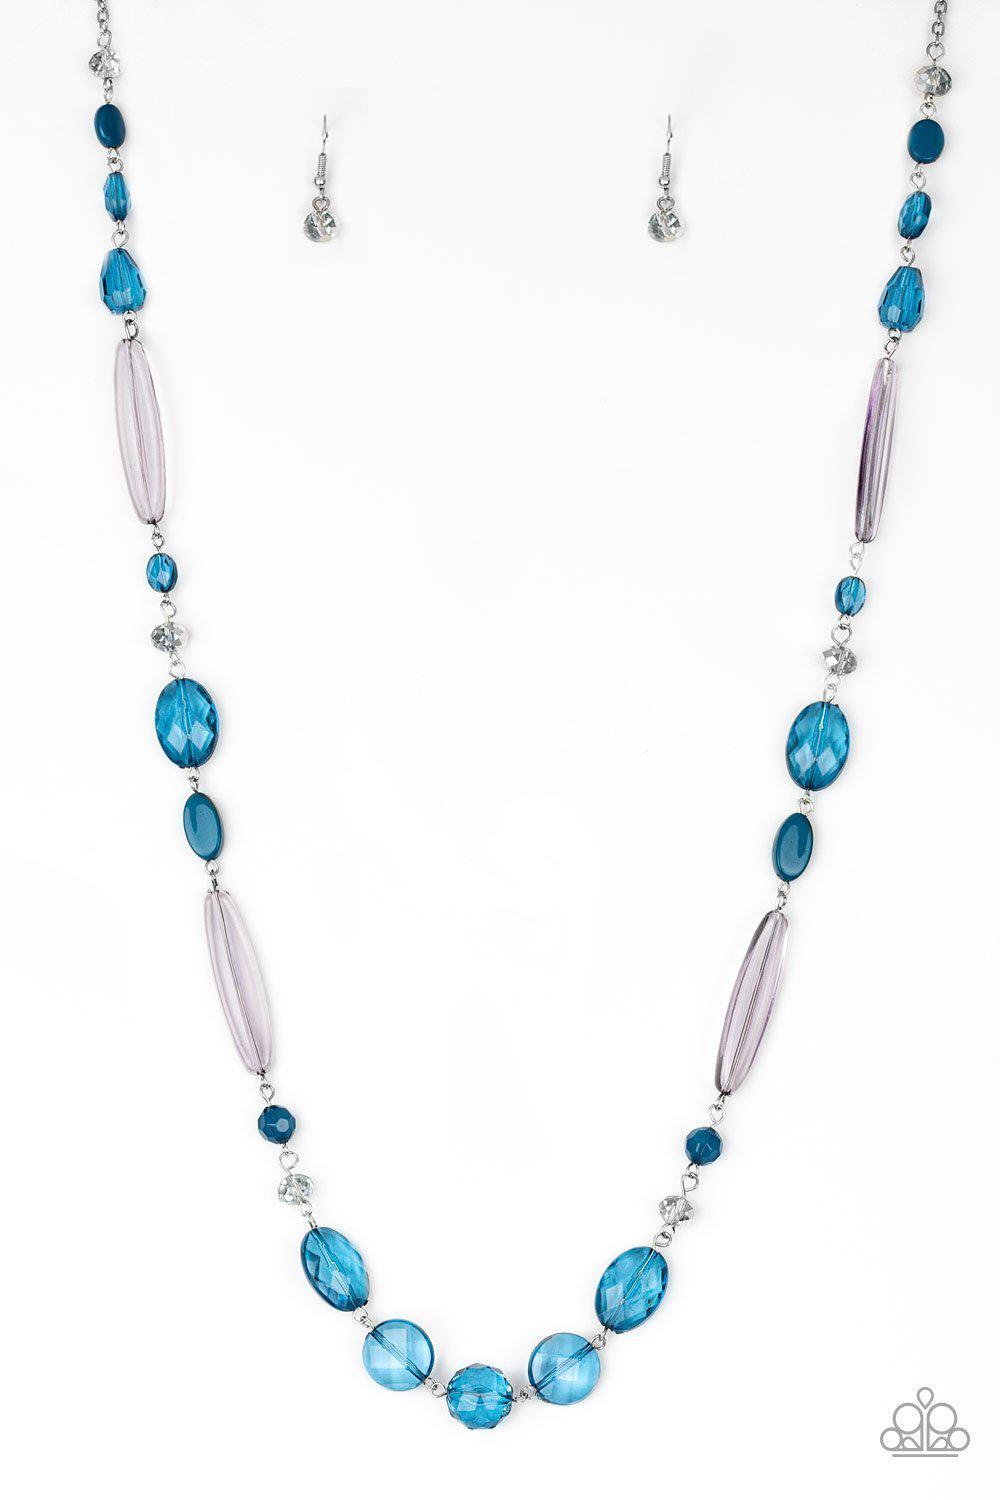 Quite Quintessence Blue Necklace - Paparazzi Accessories-CarasShop.com - $5 Jewelry by Cara Jewels